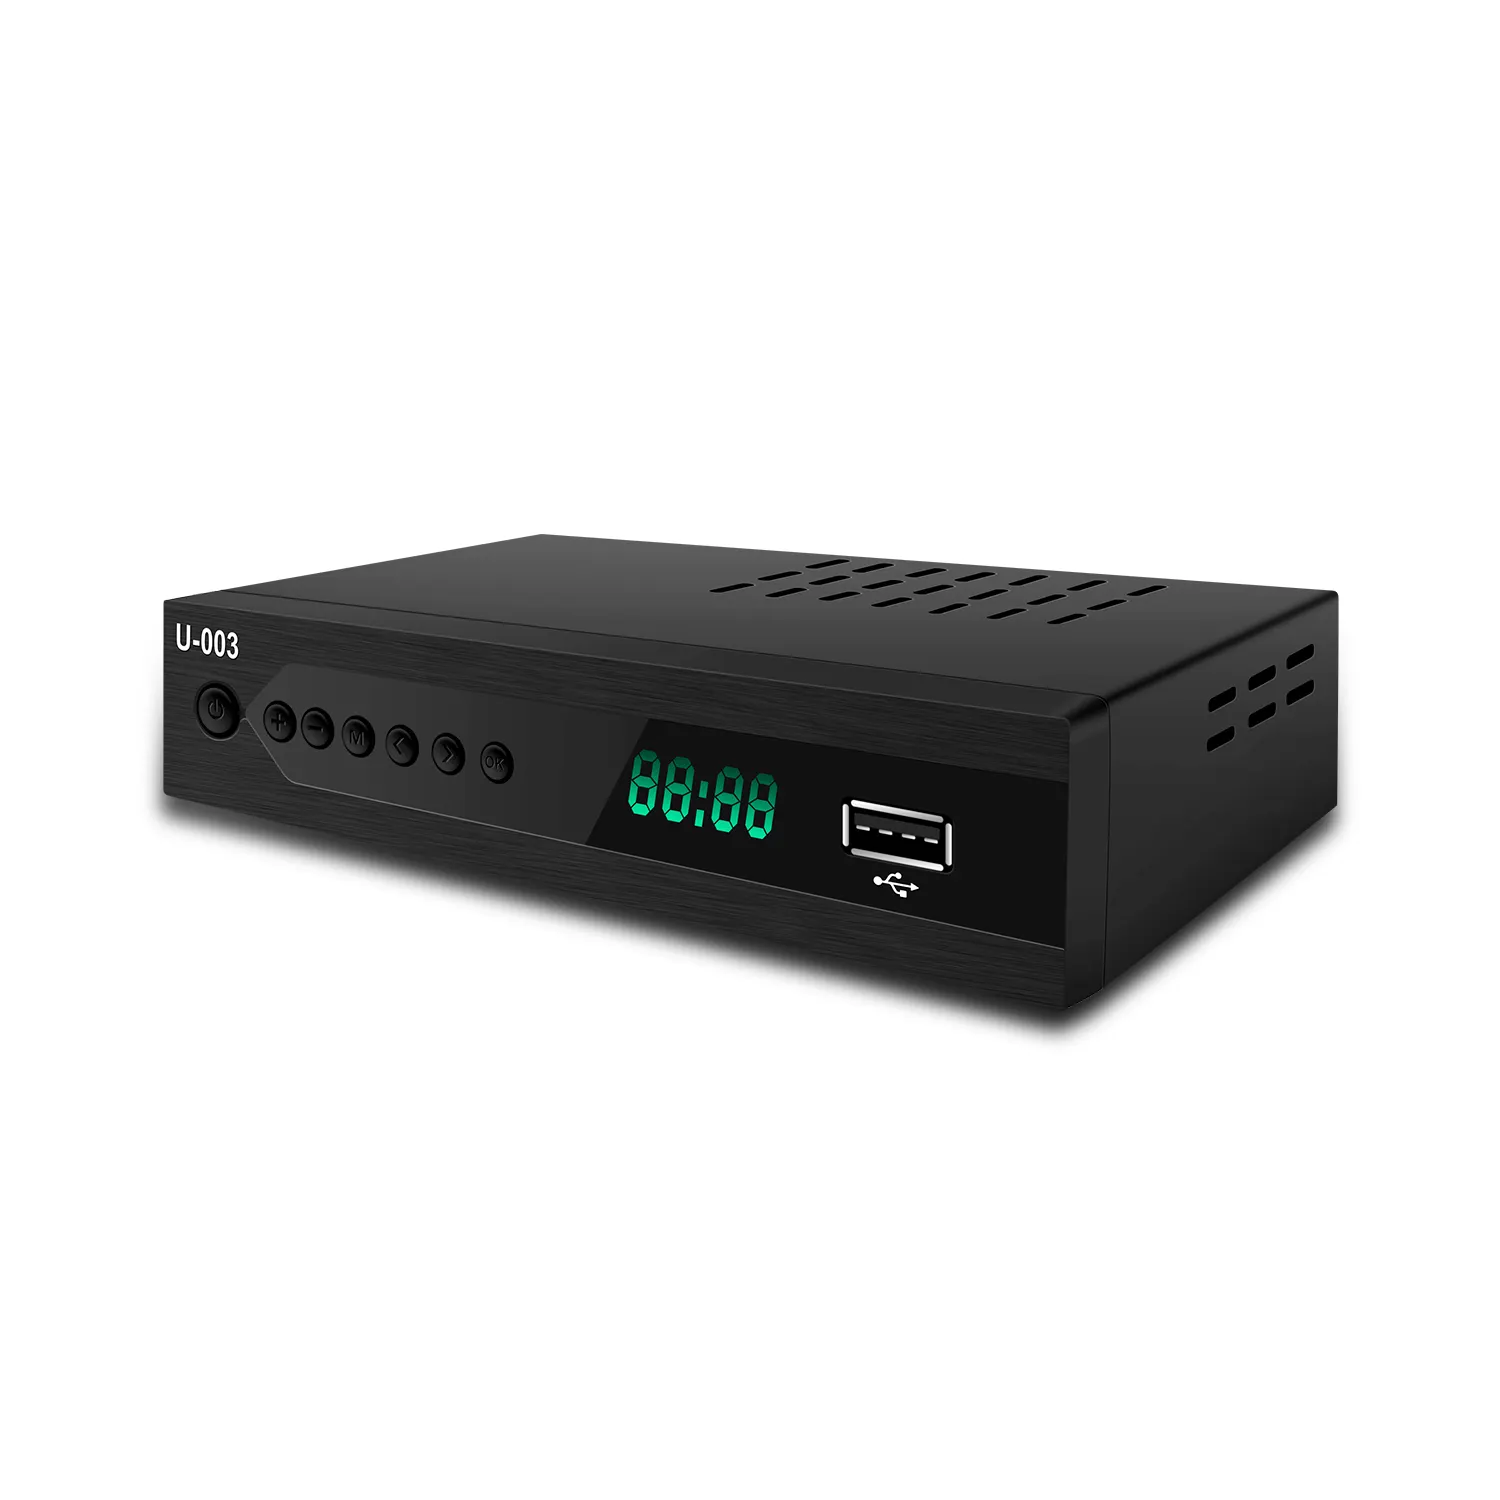 Receptor de TV digital ATSC Sintonizador de TV Mpeg 4 Set Top Box ATSC 1,0 Caja de conversión Canales gratuitos H.264 decodificador PVR HD Set-Top Box